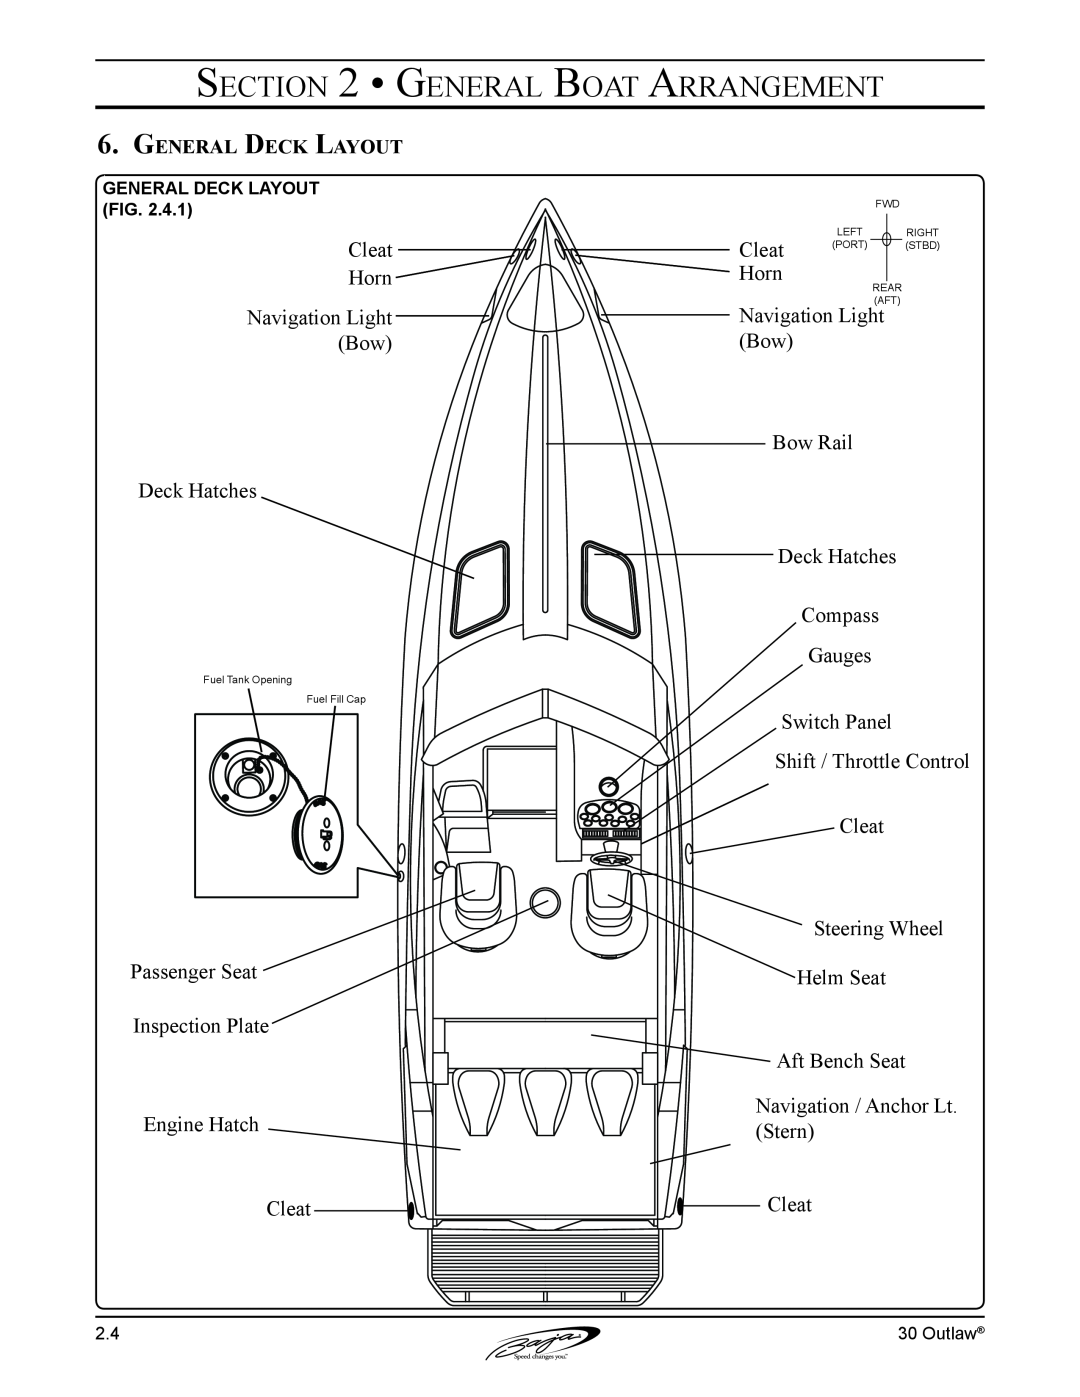 Baja Marine 30 manual General Boat Arrangement, Cleat Horn Navigation Light Bow Deck Hatches 